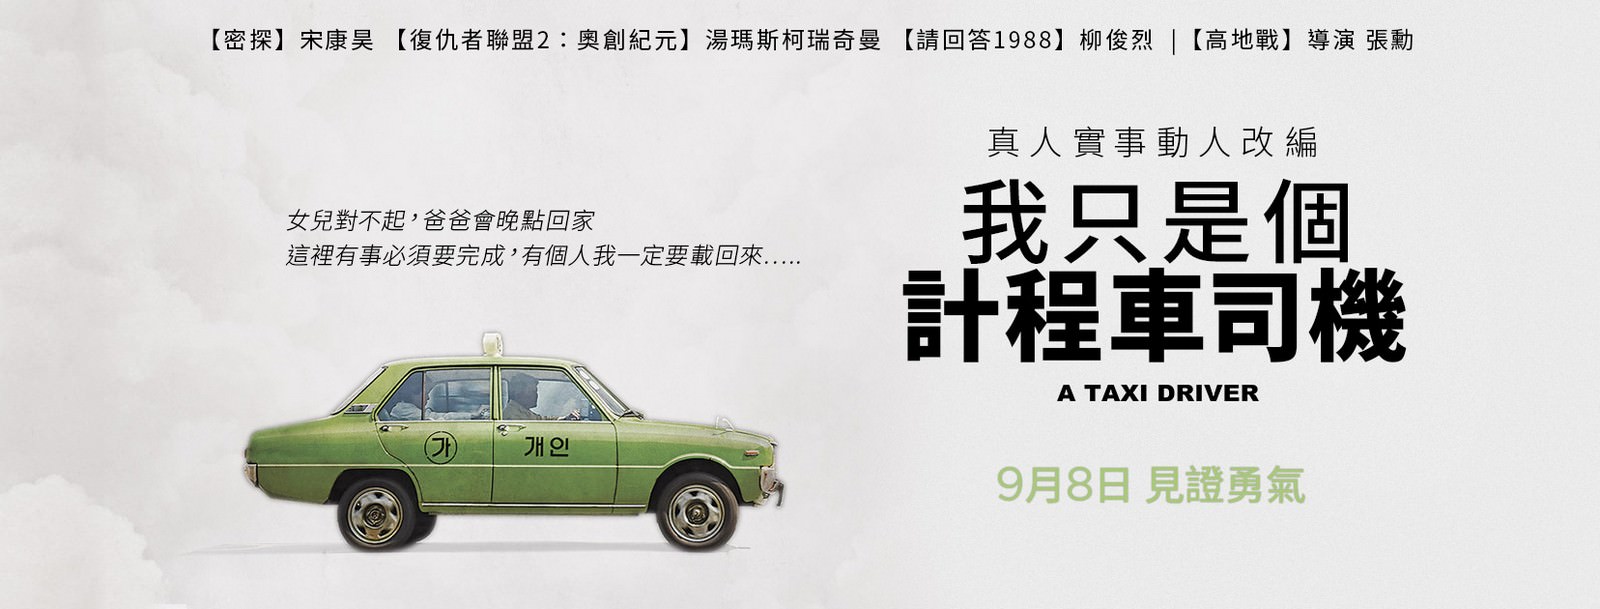 Movie, 택시 운전사(韓國, 2017年) / 我只是個計程車司機(台灣) / 逆權司機(香港) / 出租车司机(網路) / A Taxi Driver(英文), 電影海報, 台灣, 橫版